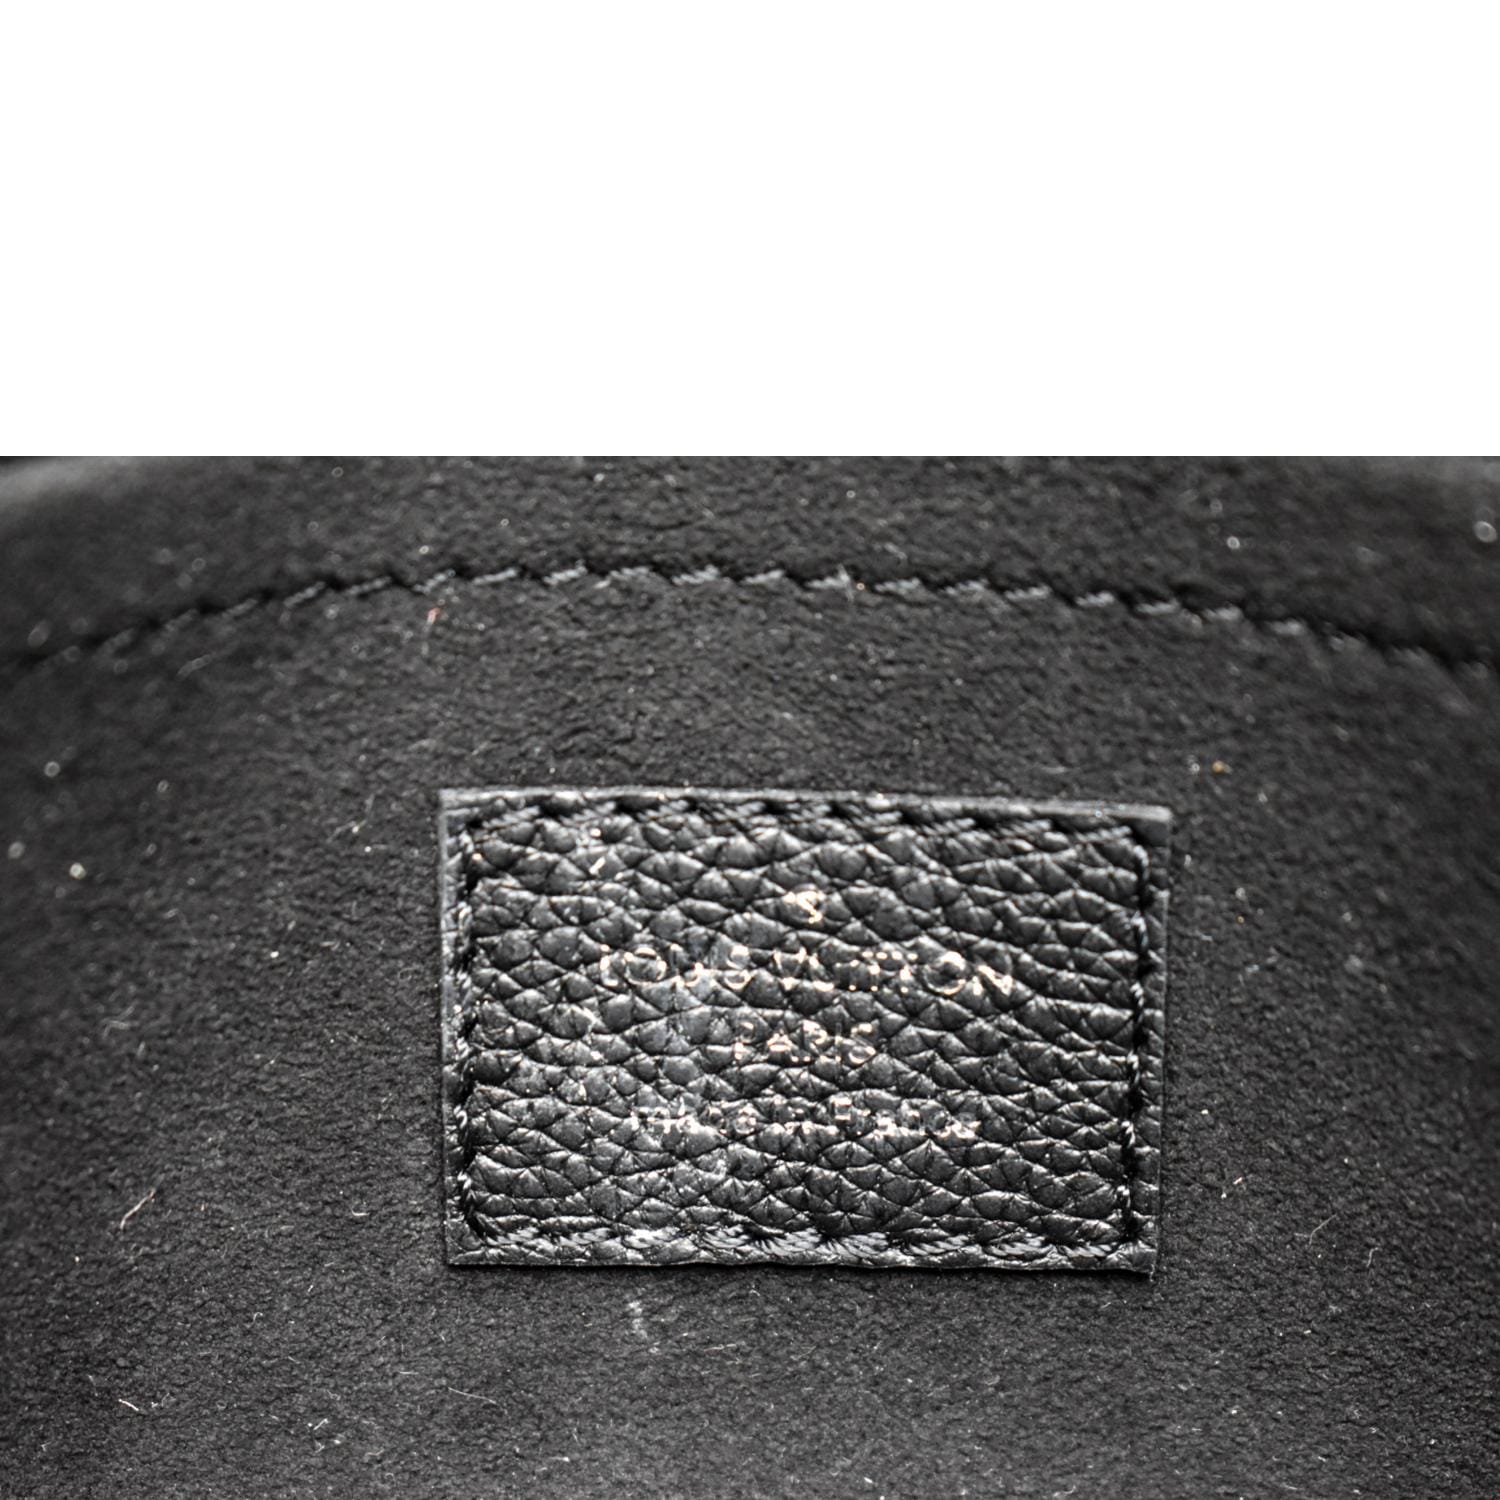 Louis Vuitton MyLockMe Chain Bag - ShopStyle